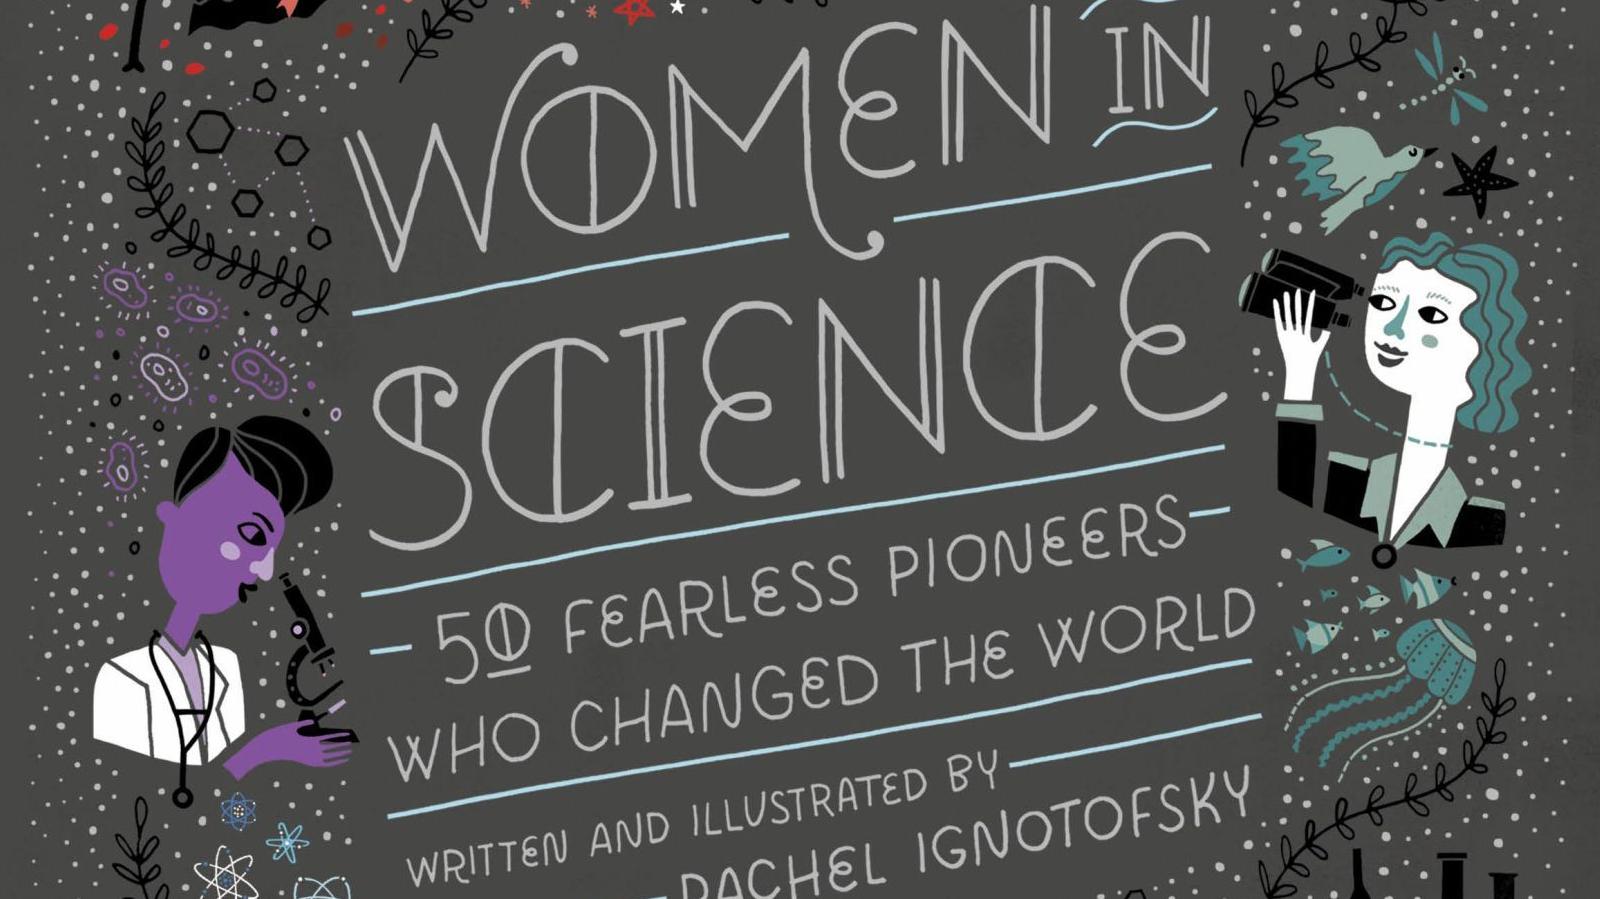 Women in Science, by Rachel Ignotofsky